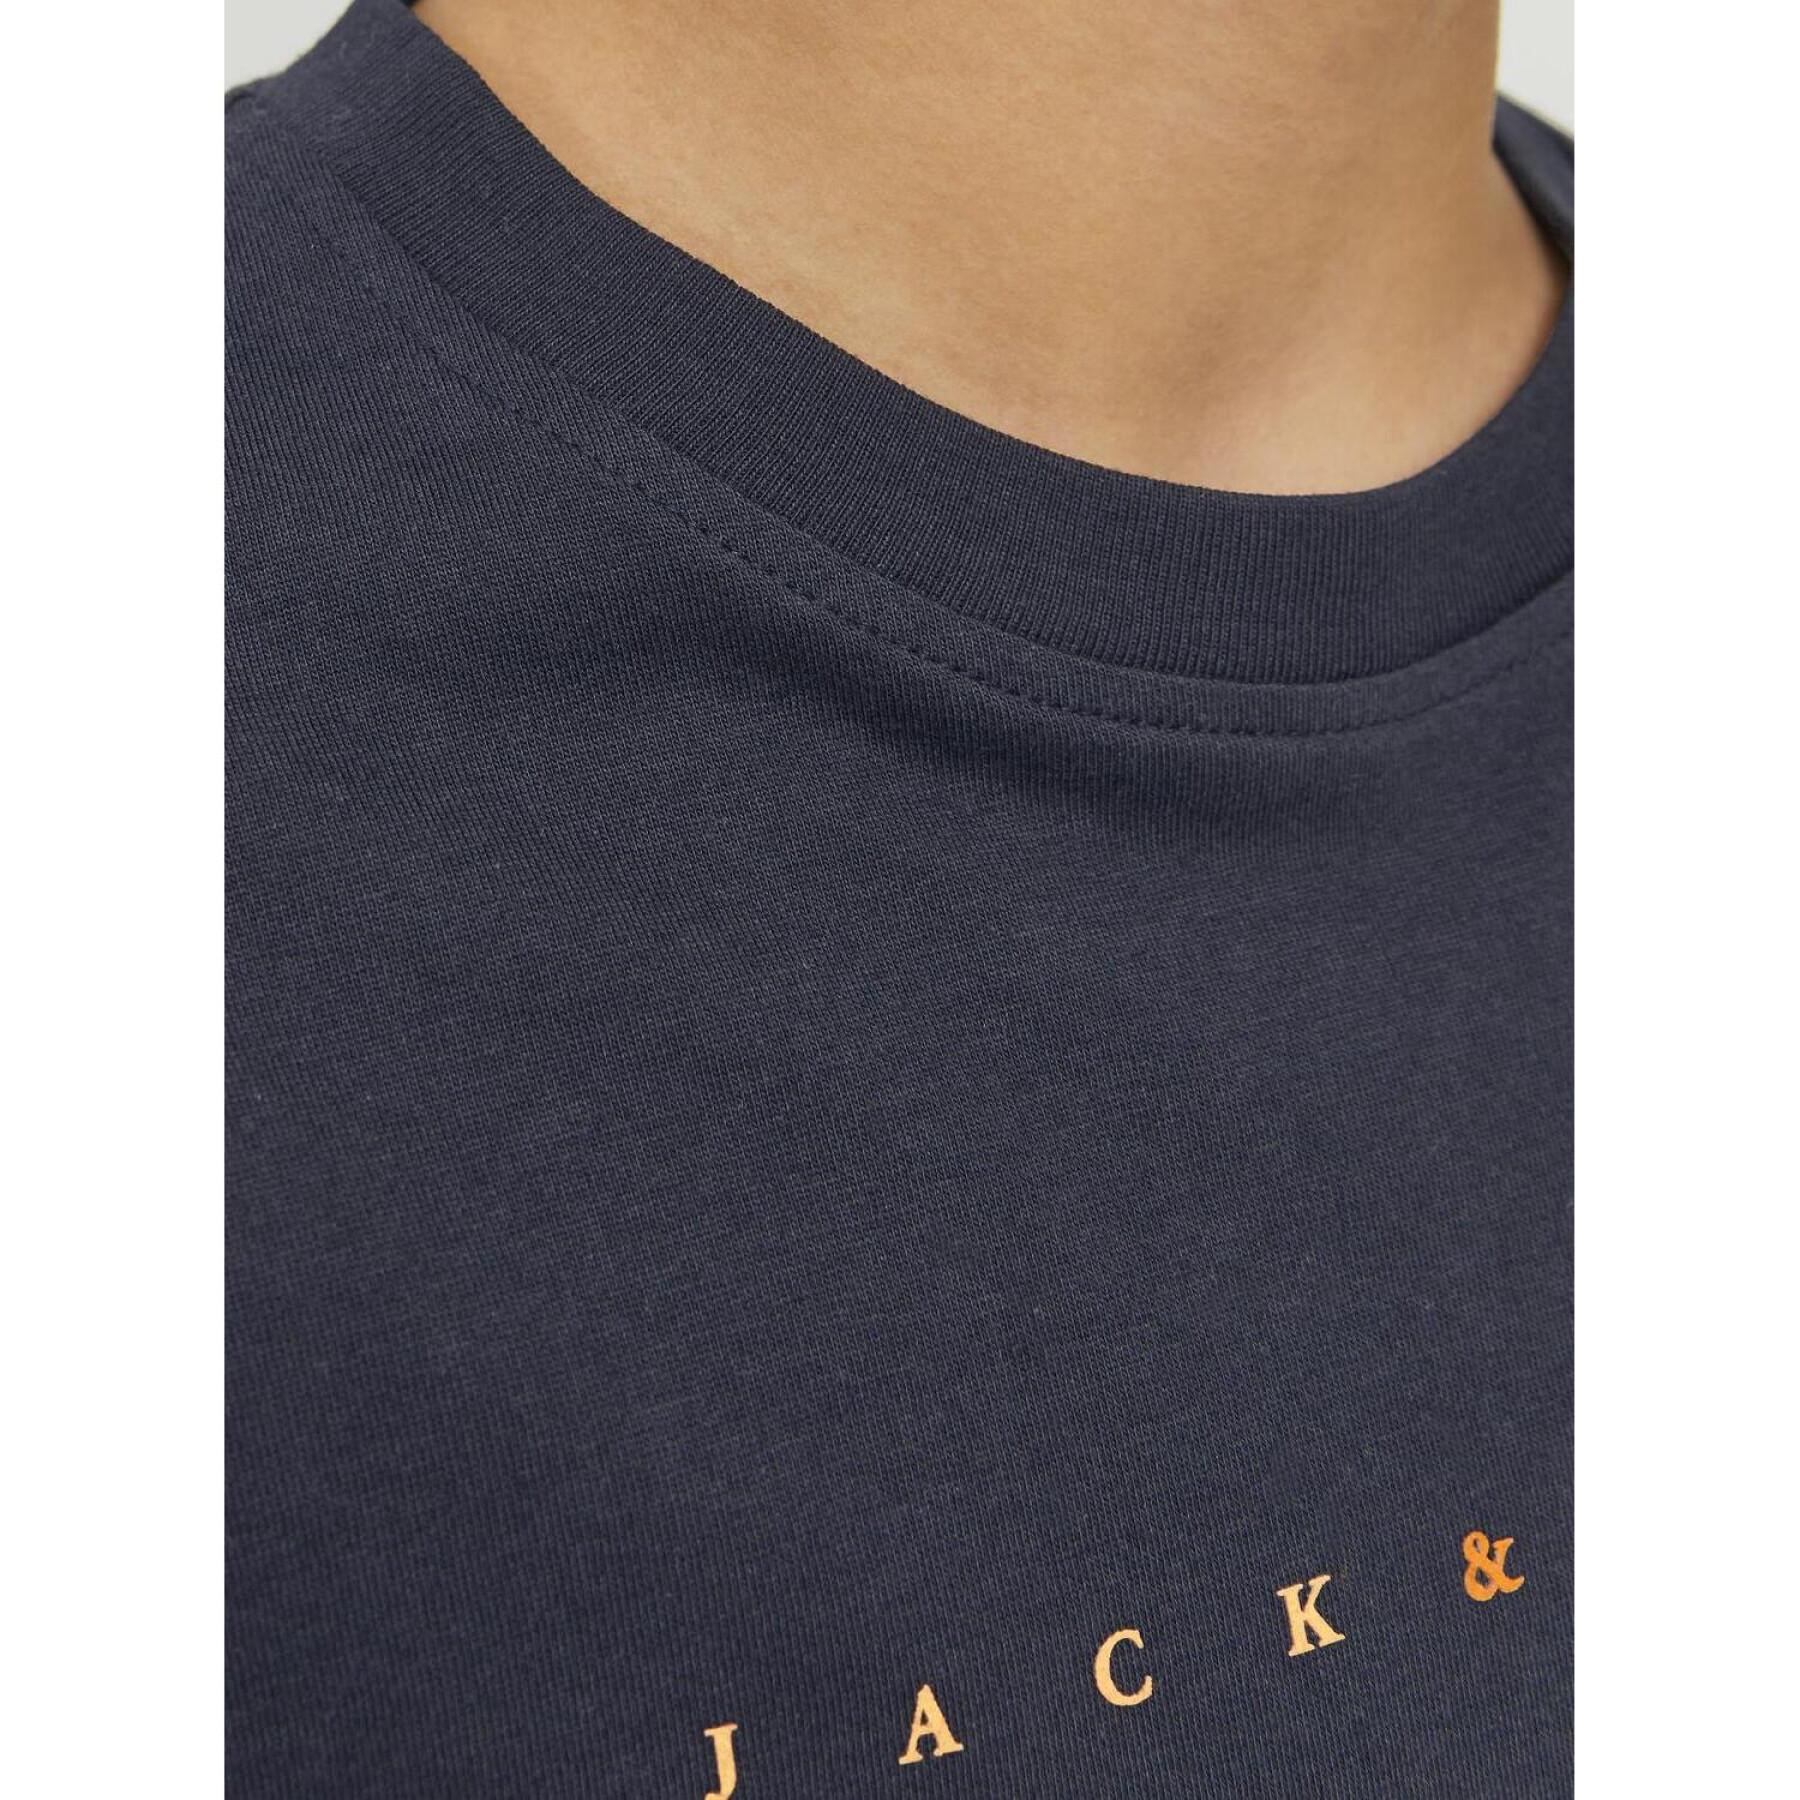 T-shirt enfant Jack & Jones Star